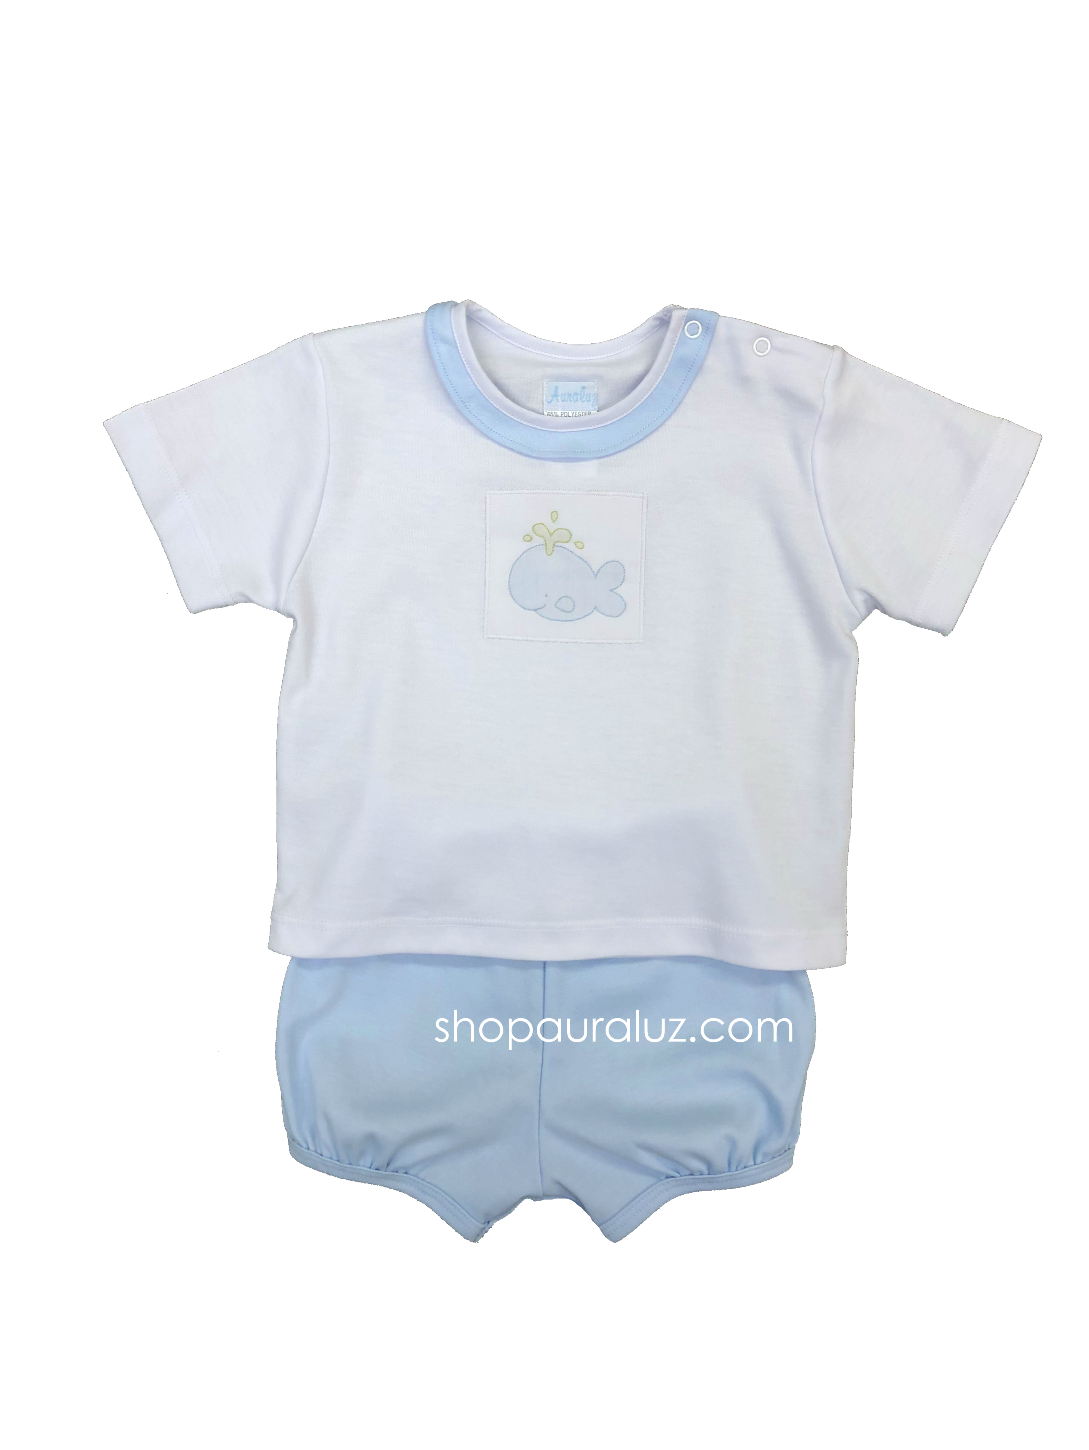 Auraluz Boy 2pc Knit Set..Blue short/white shirt with embroidered whale